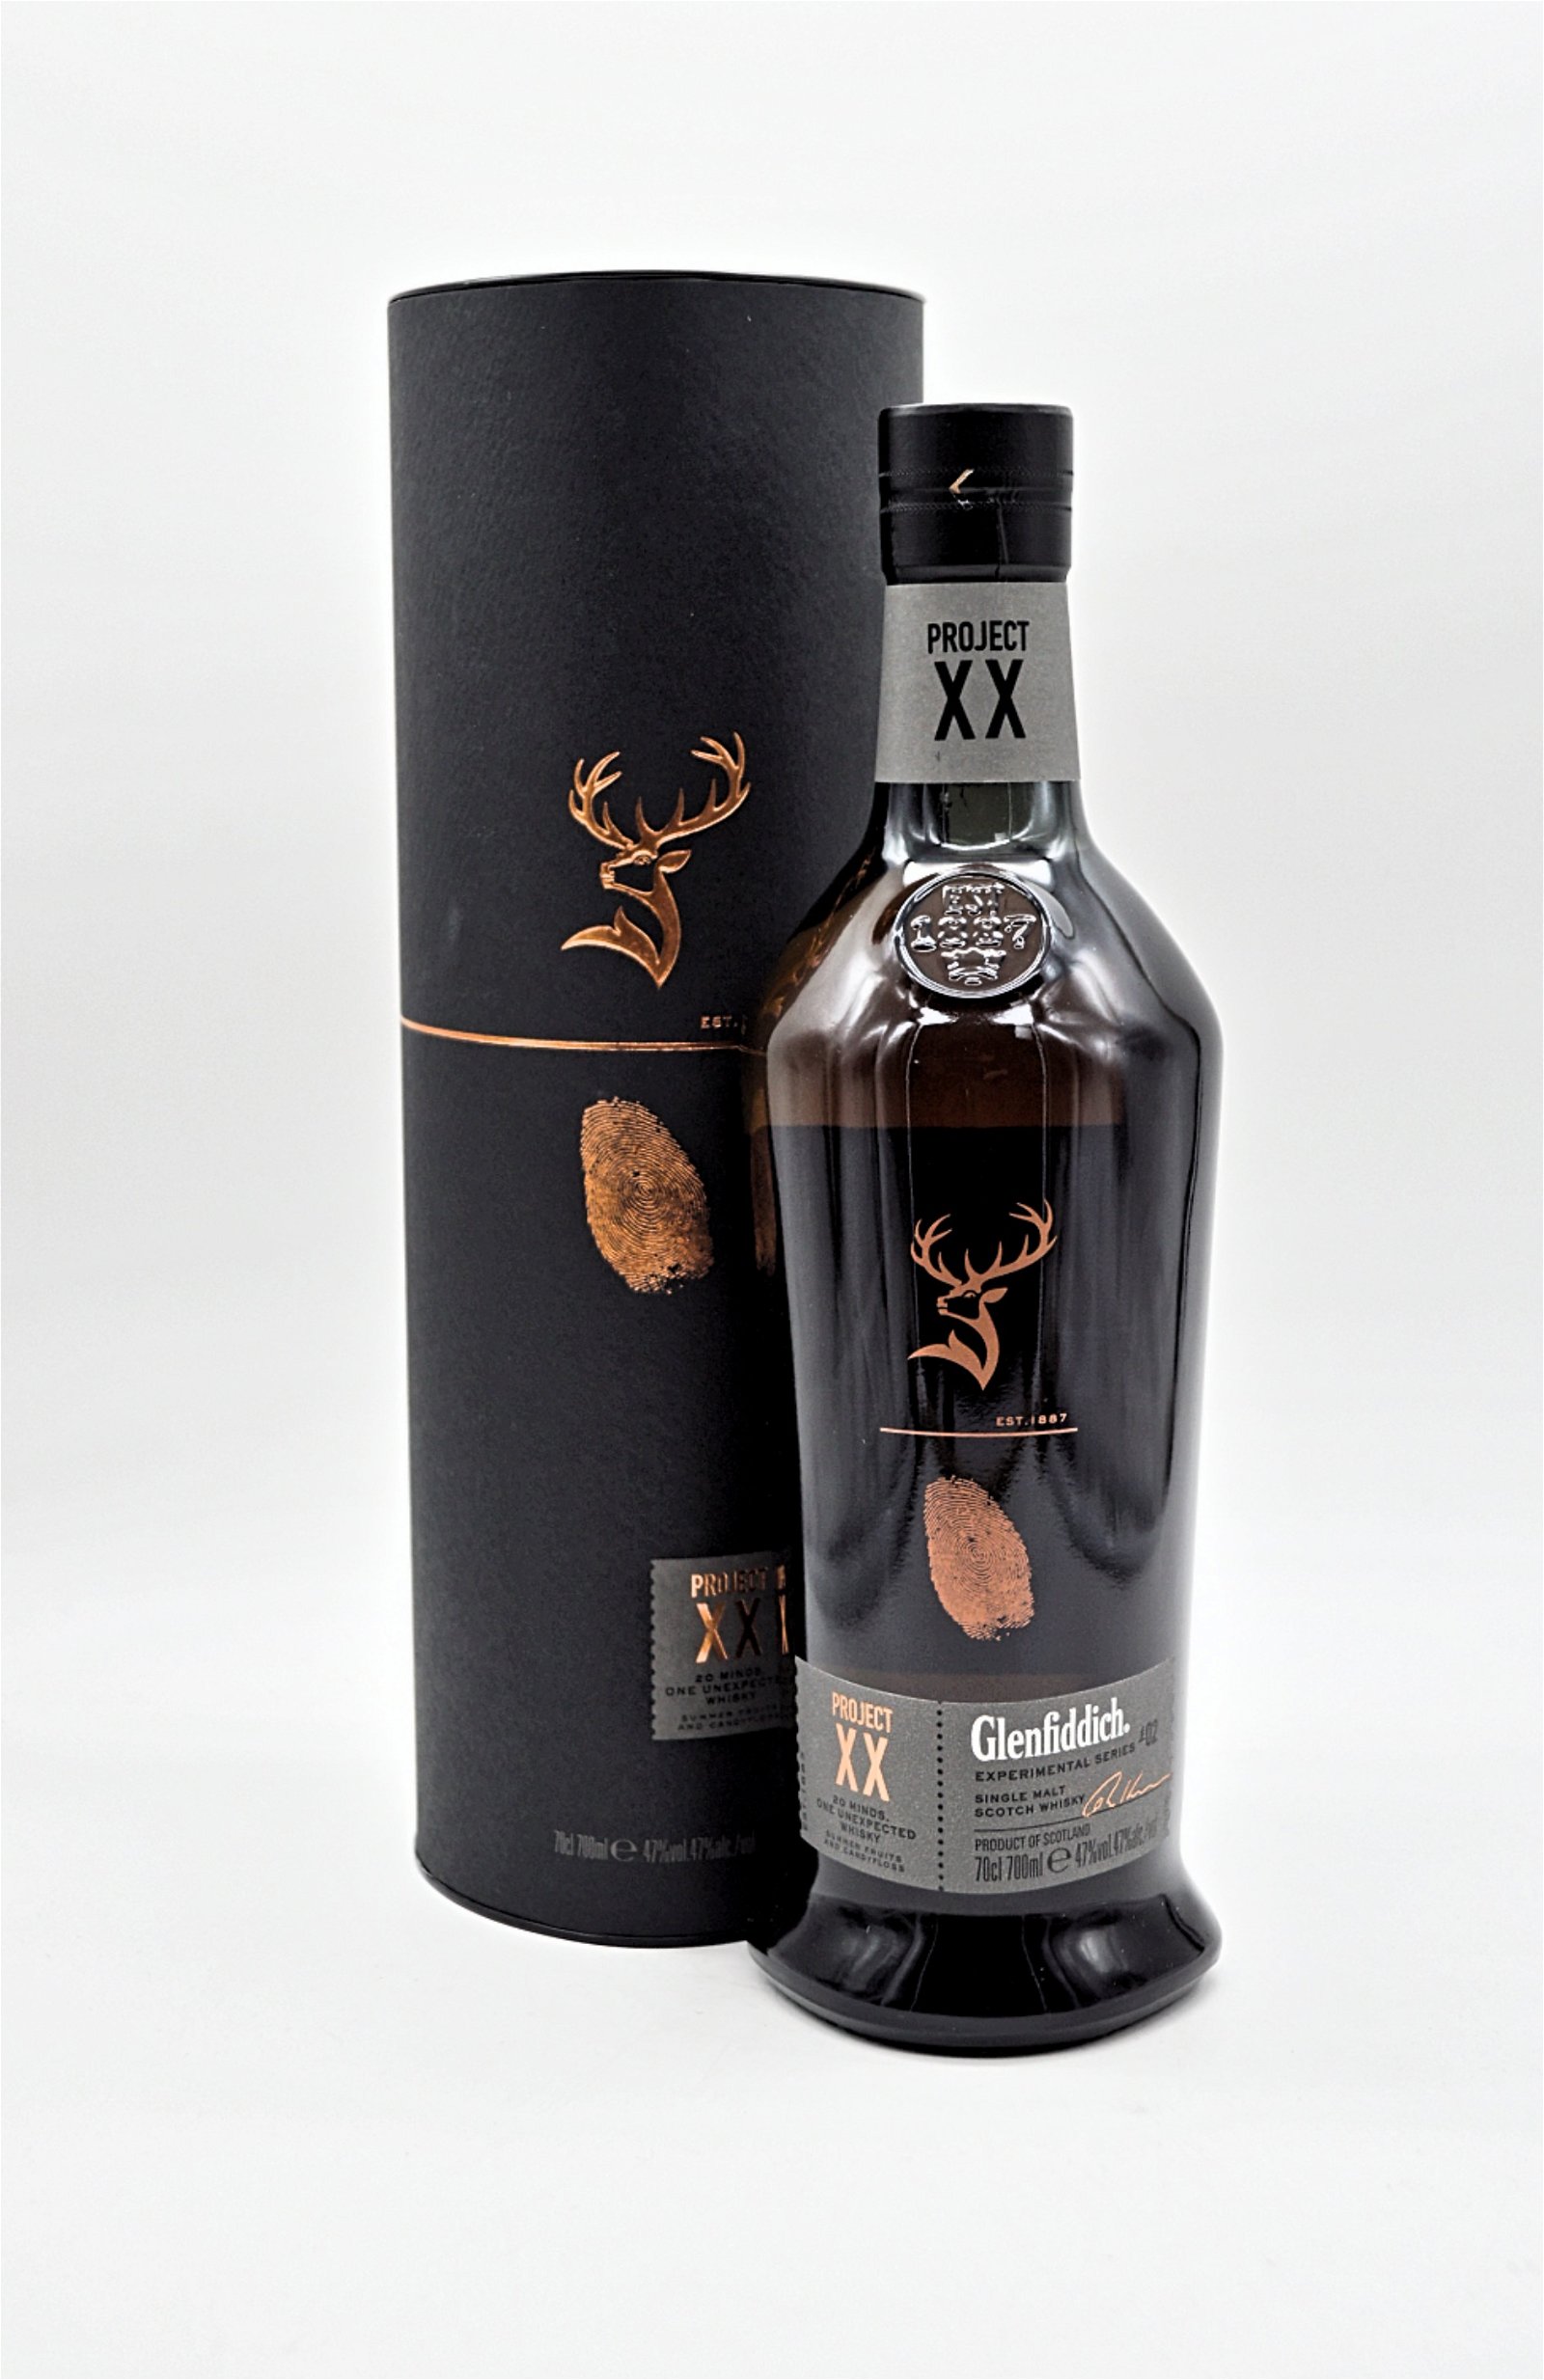 Glenfiddich Experimental Series Project XX Single Malt Scotch Whisky